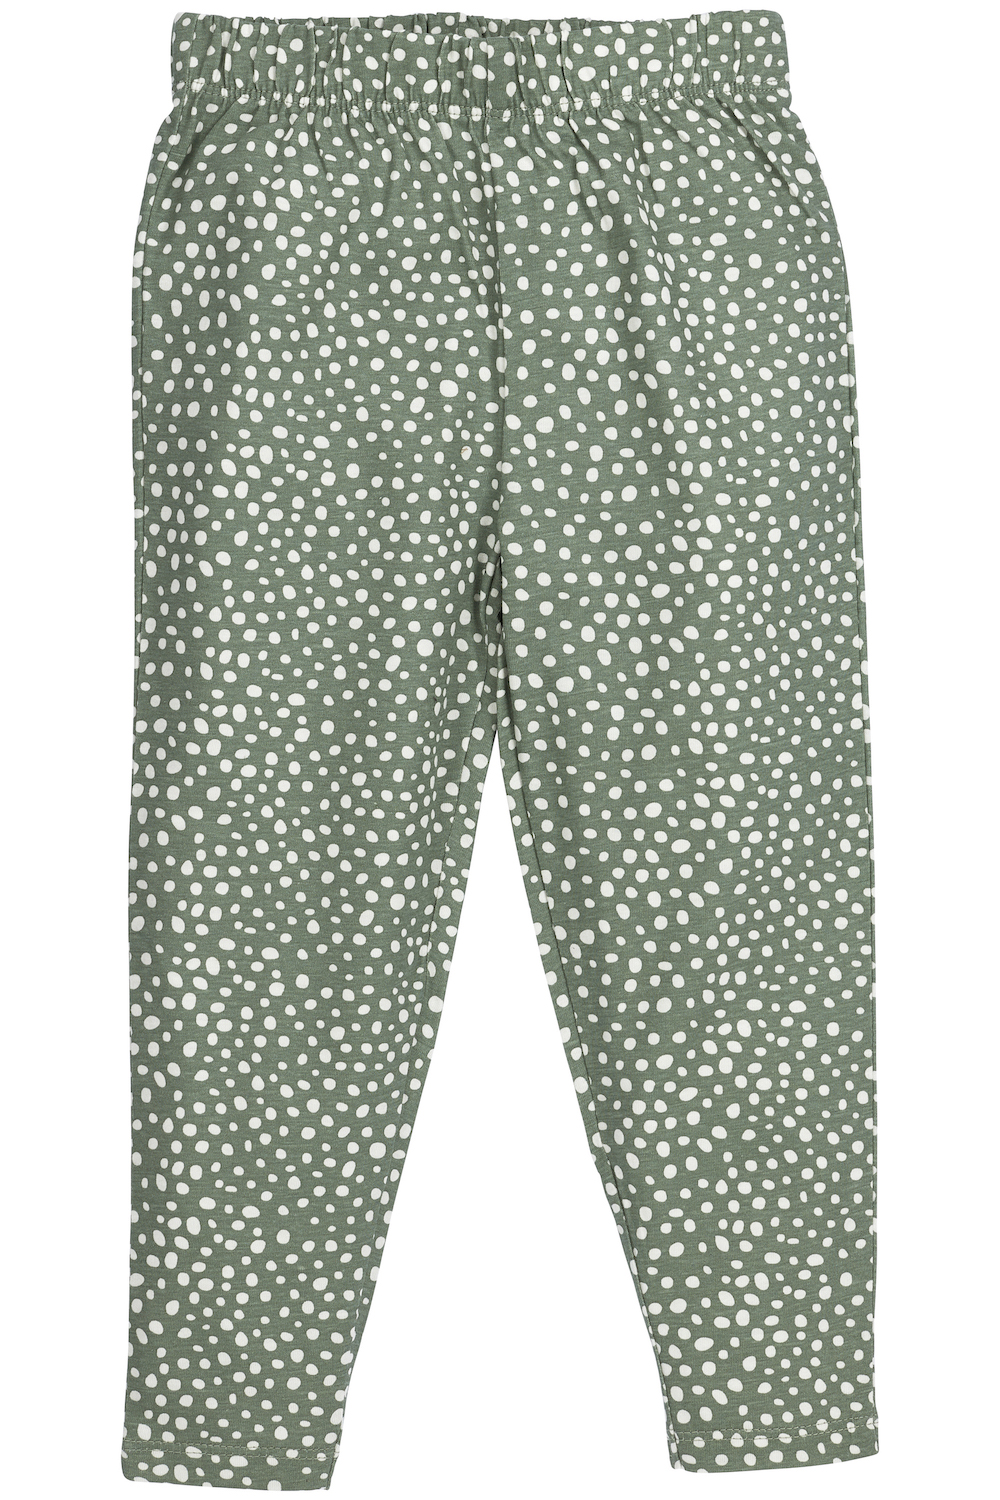 Pyjamas 2-pack Cheetah - forest green - 86/92